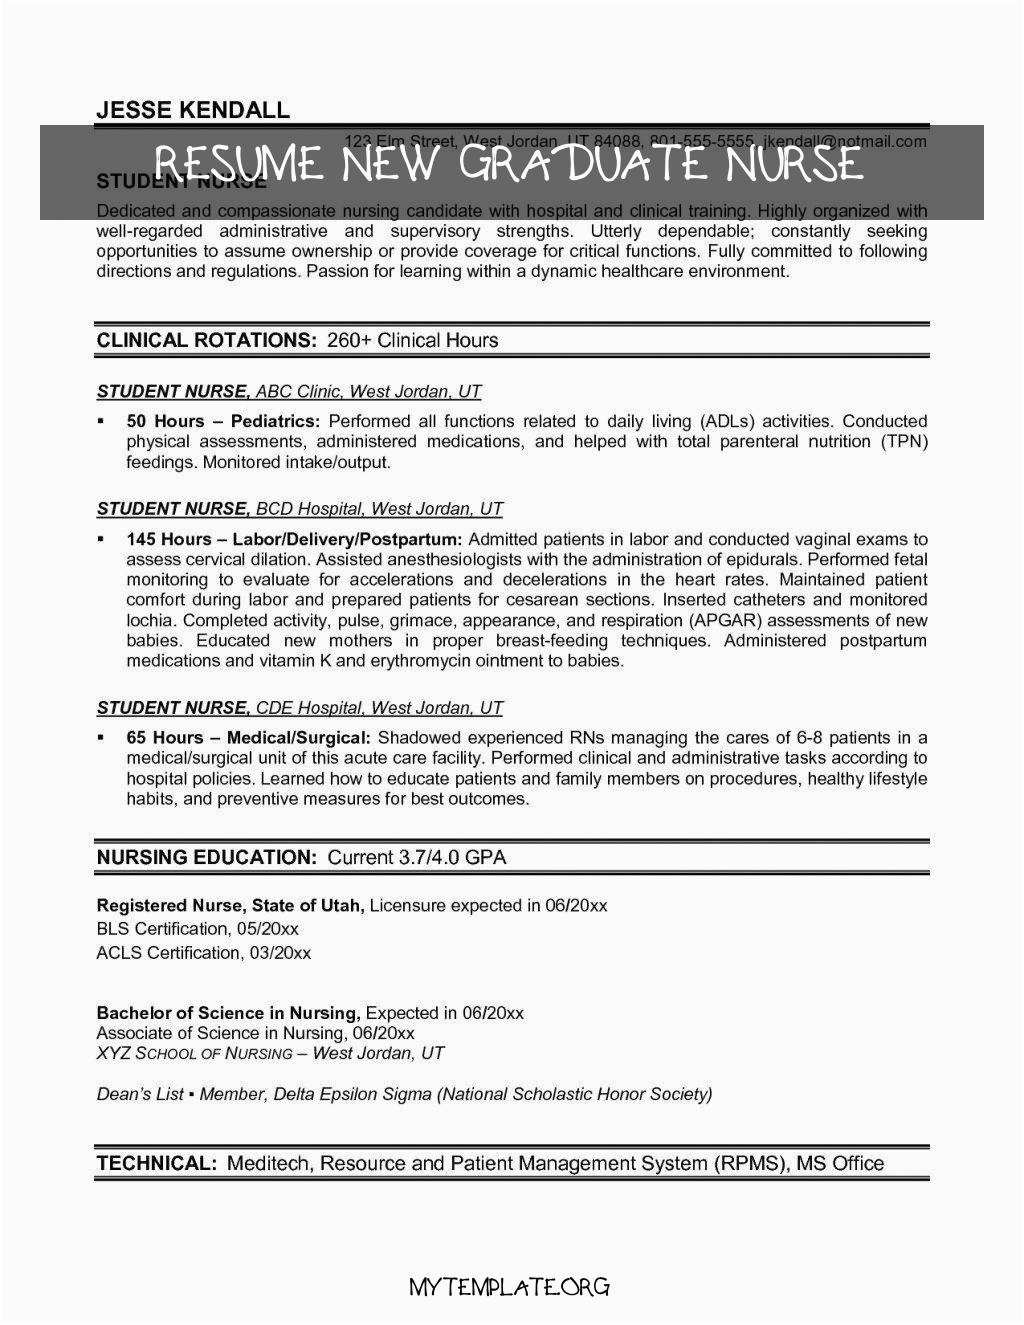 resume new graduate nurse of new grad rn resume luxury recent graduate resume template salumguilher